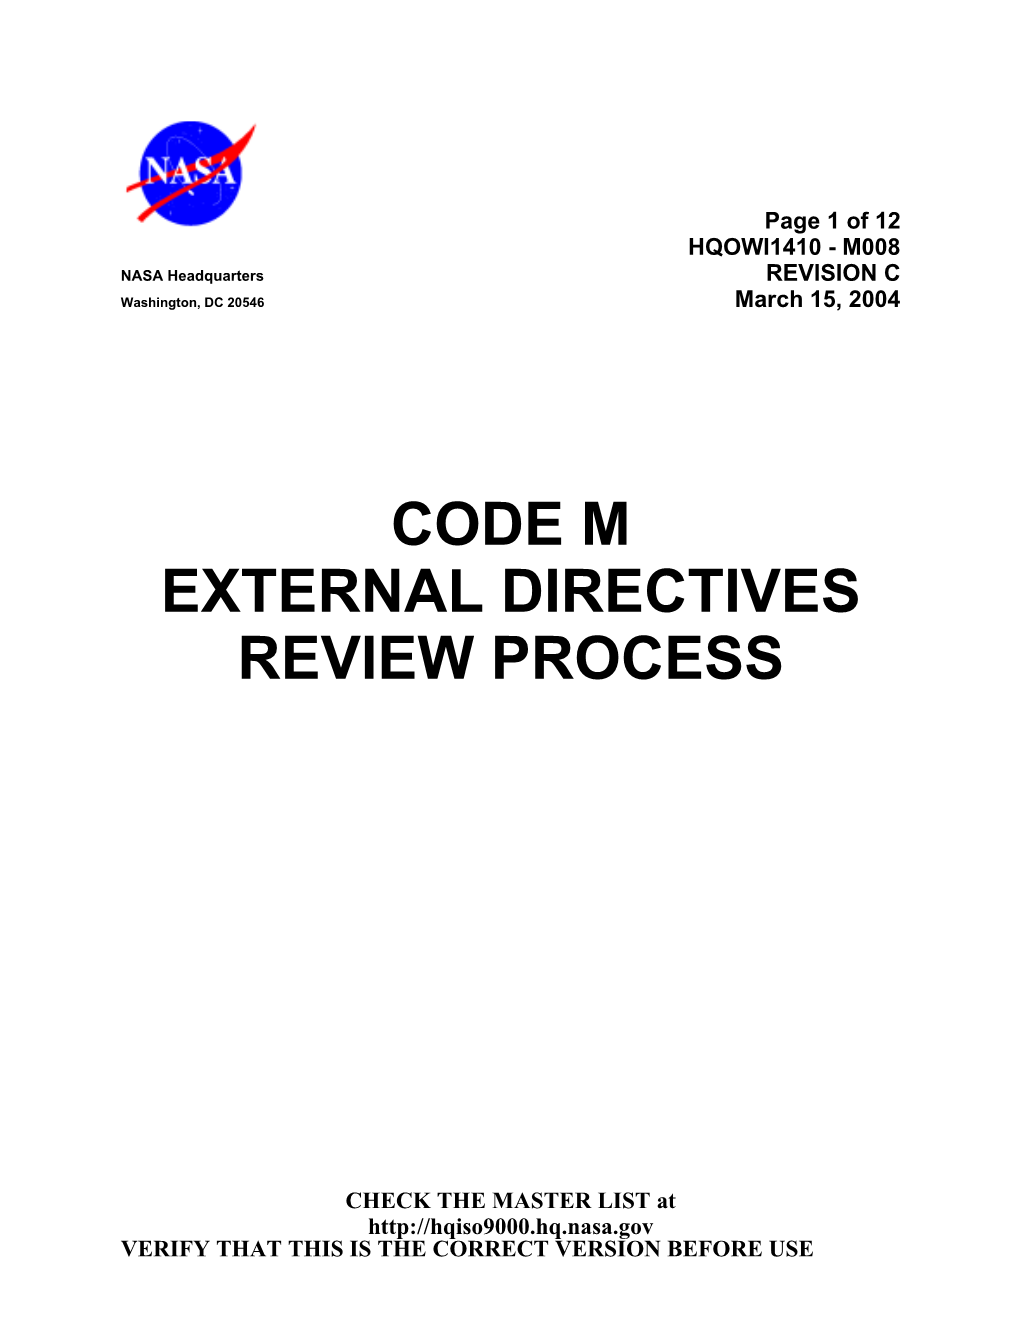 External Directives Review Process